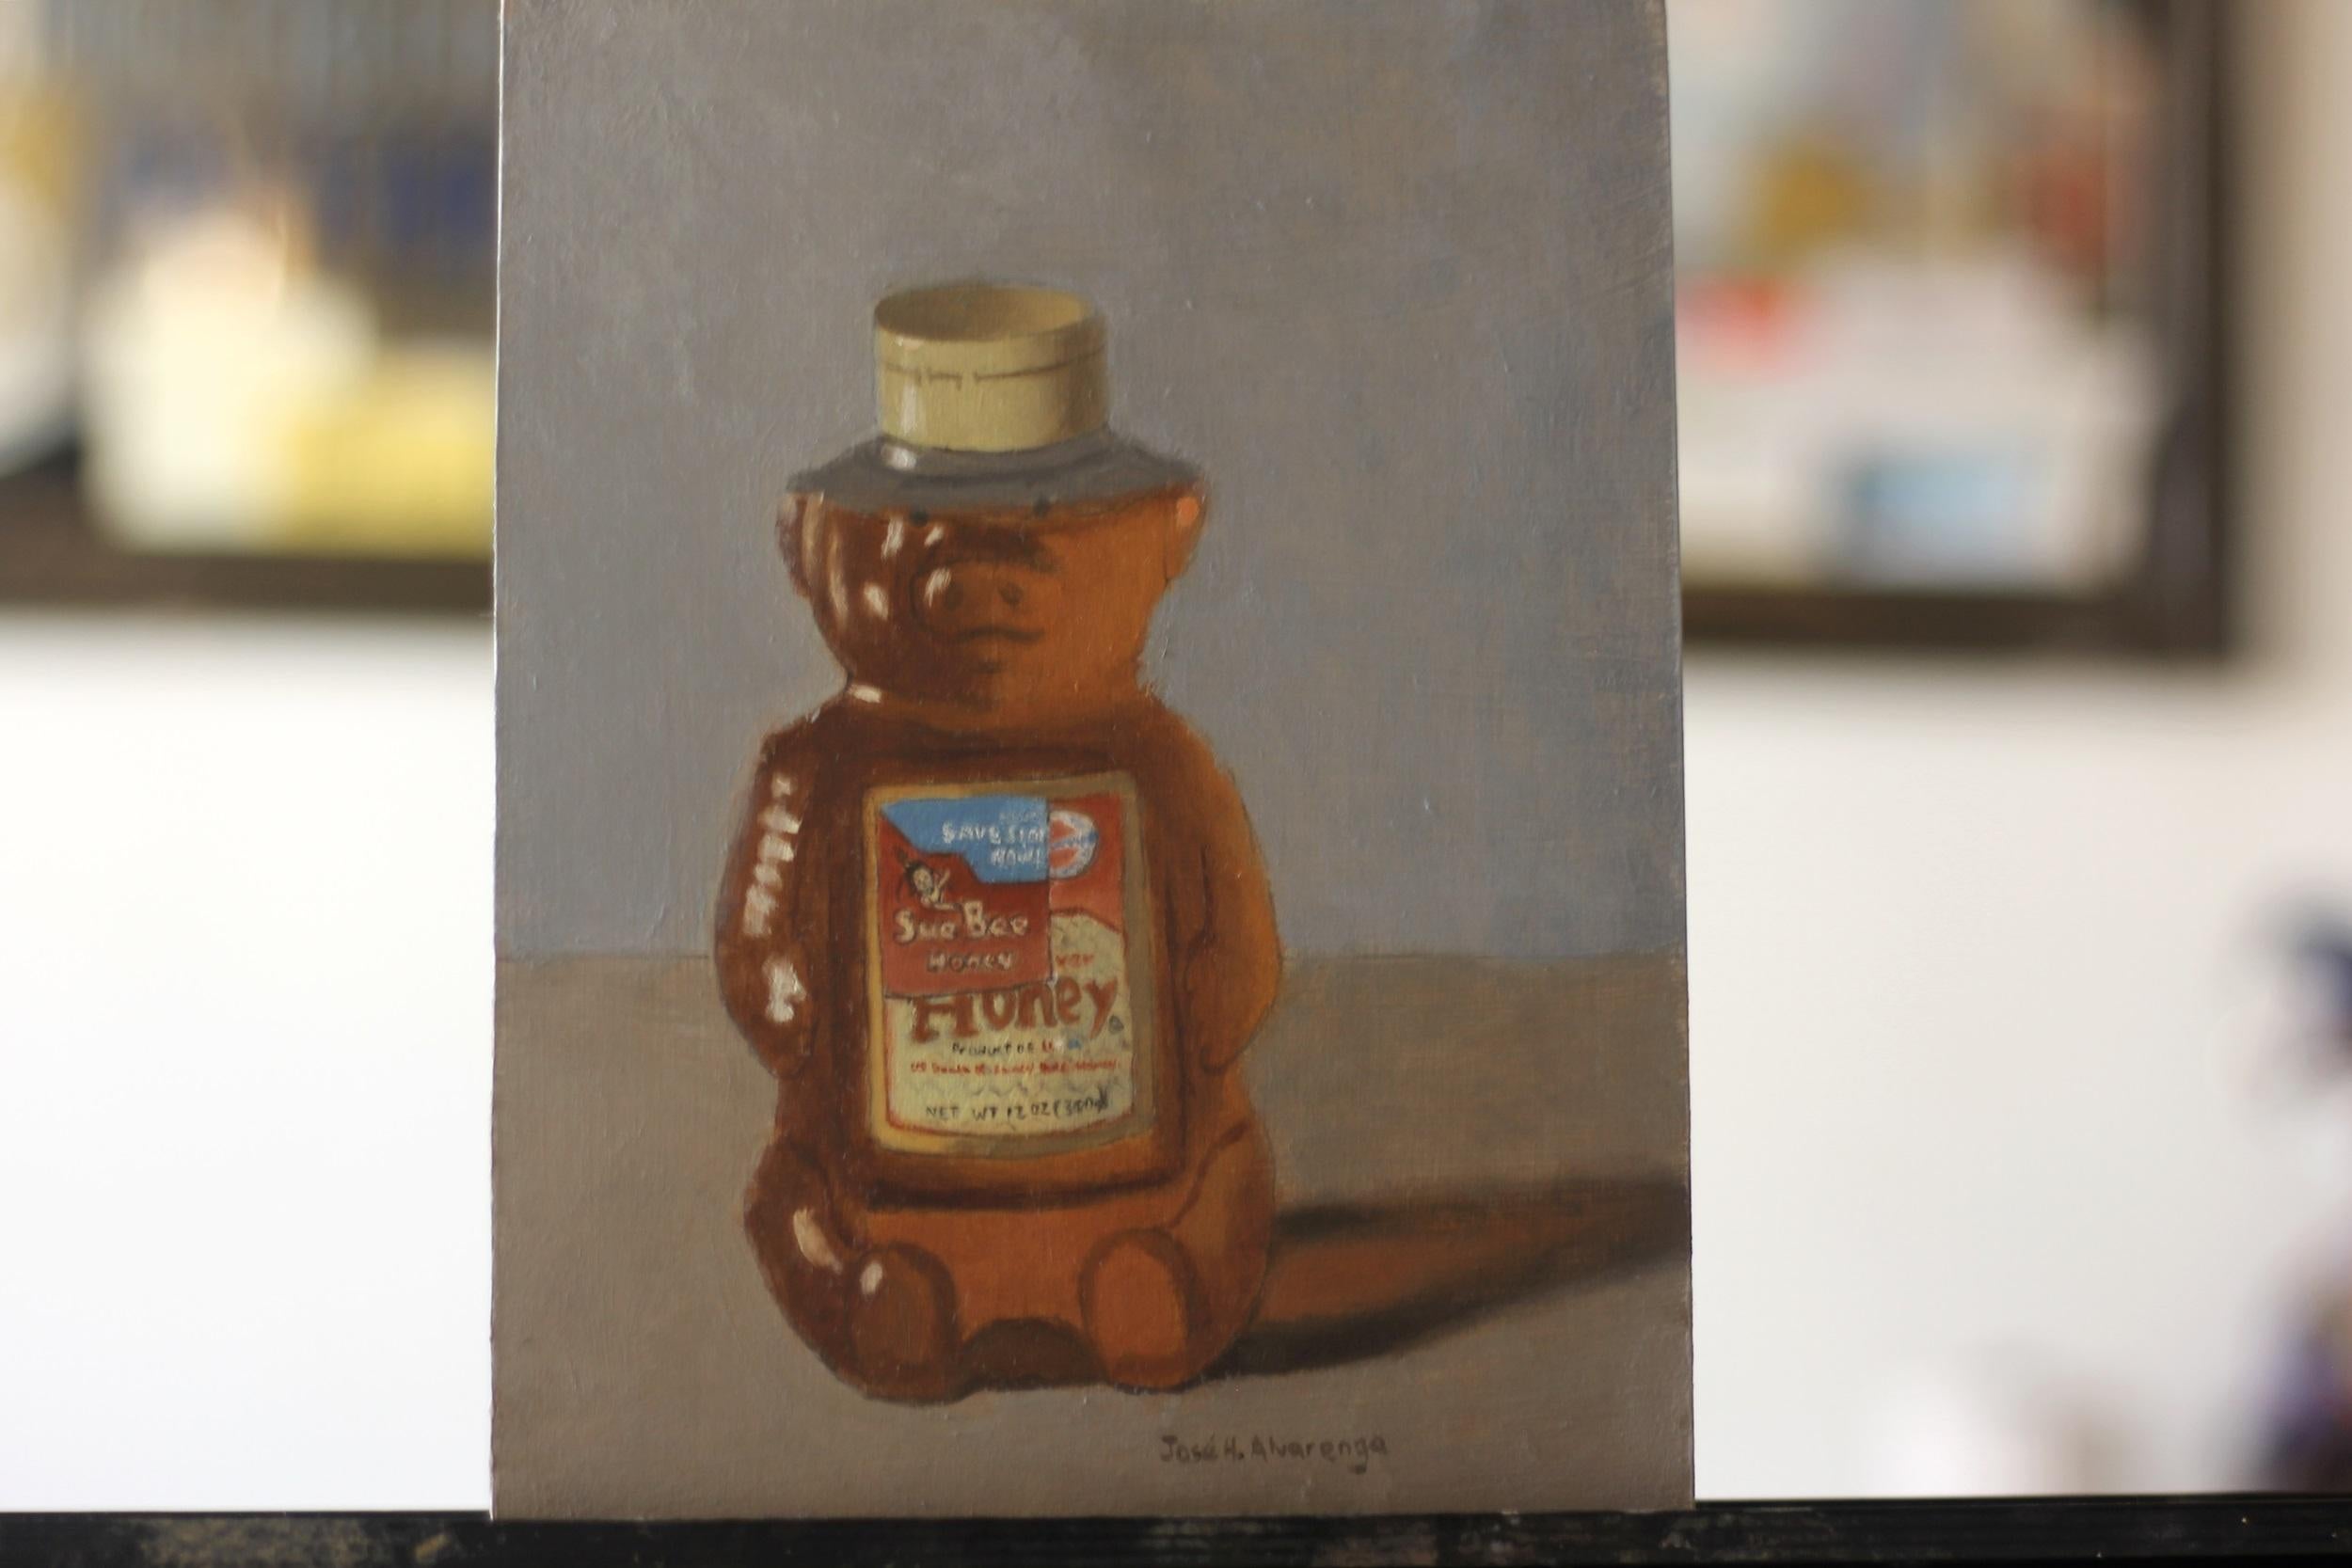 honey bear painting